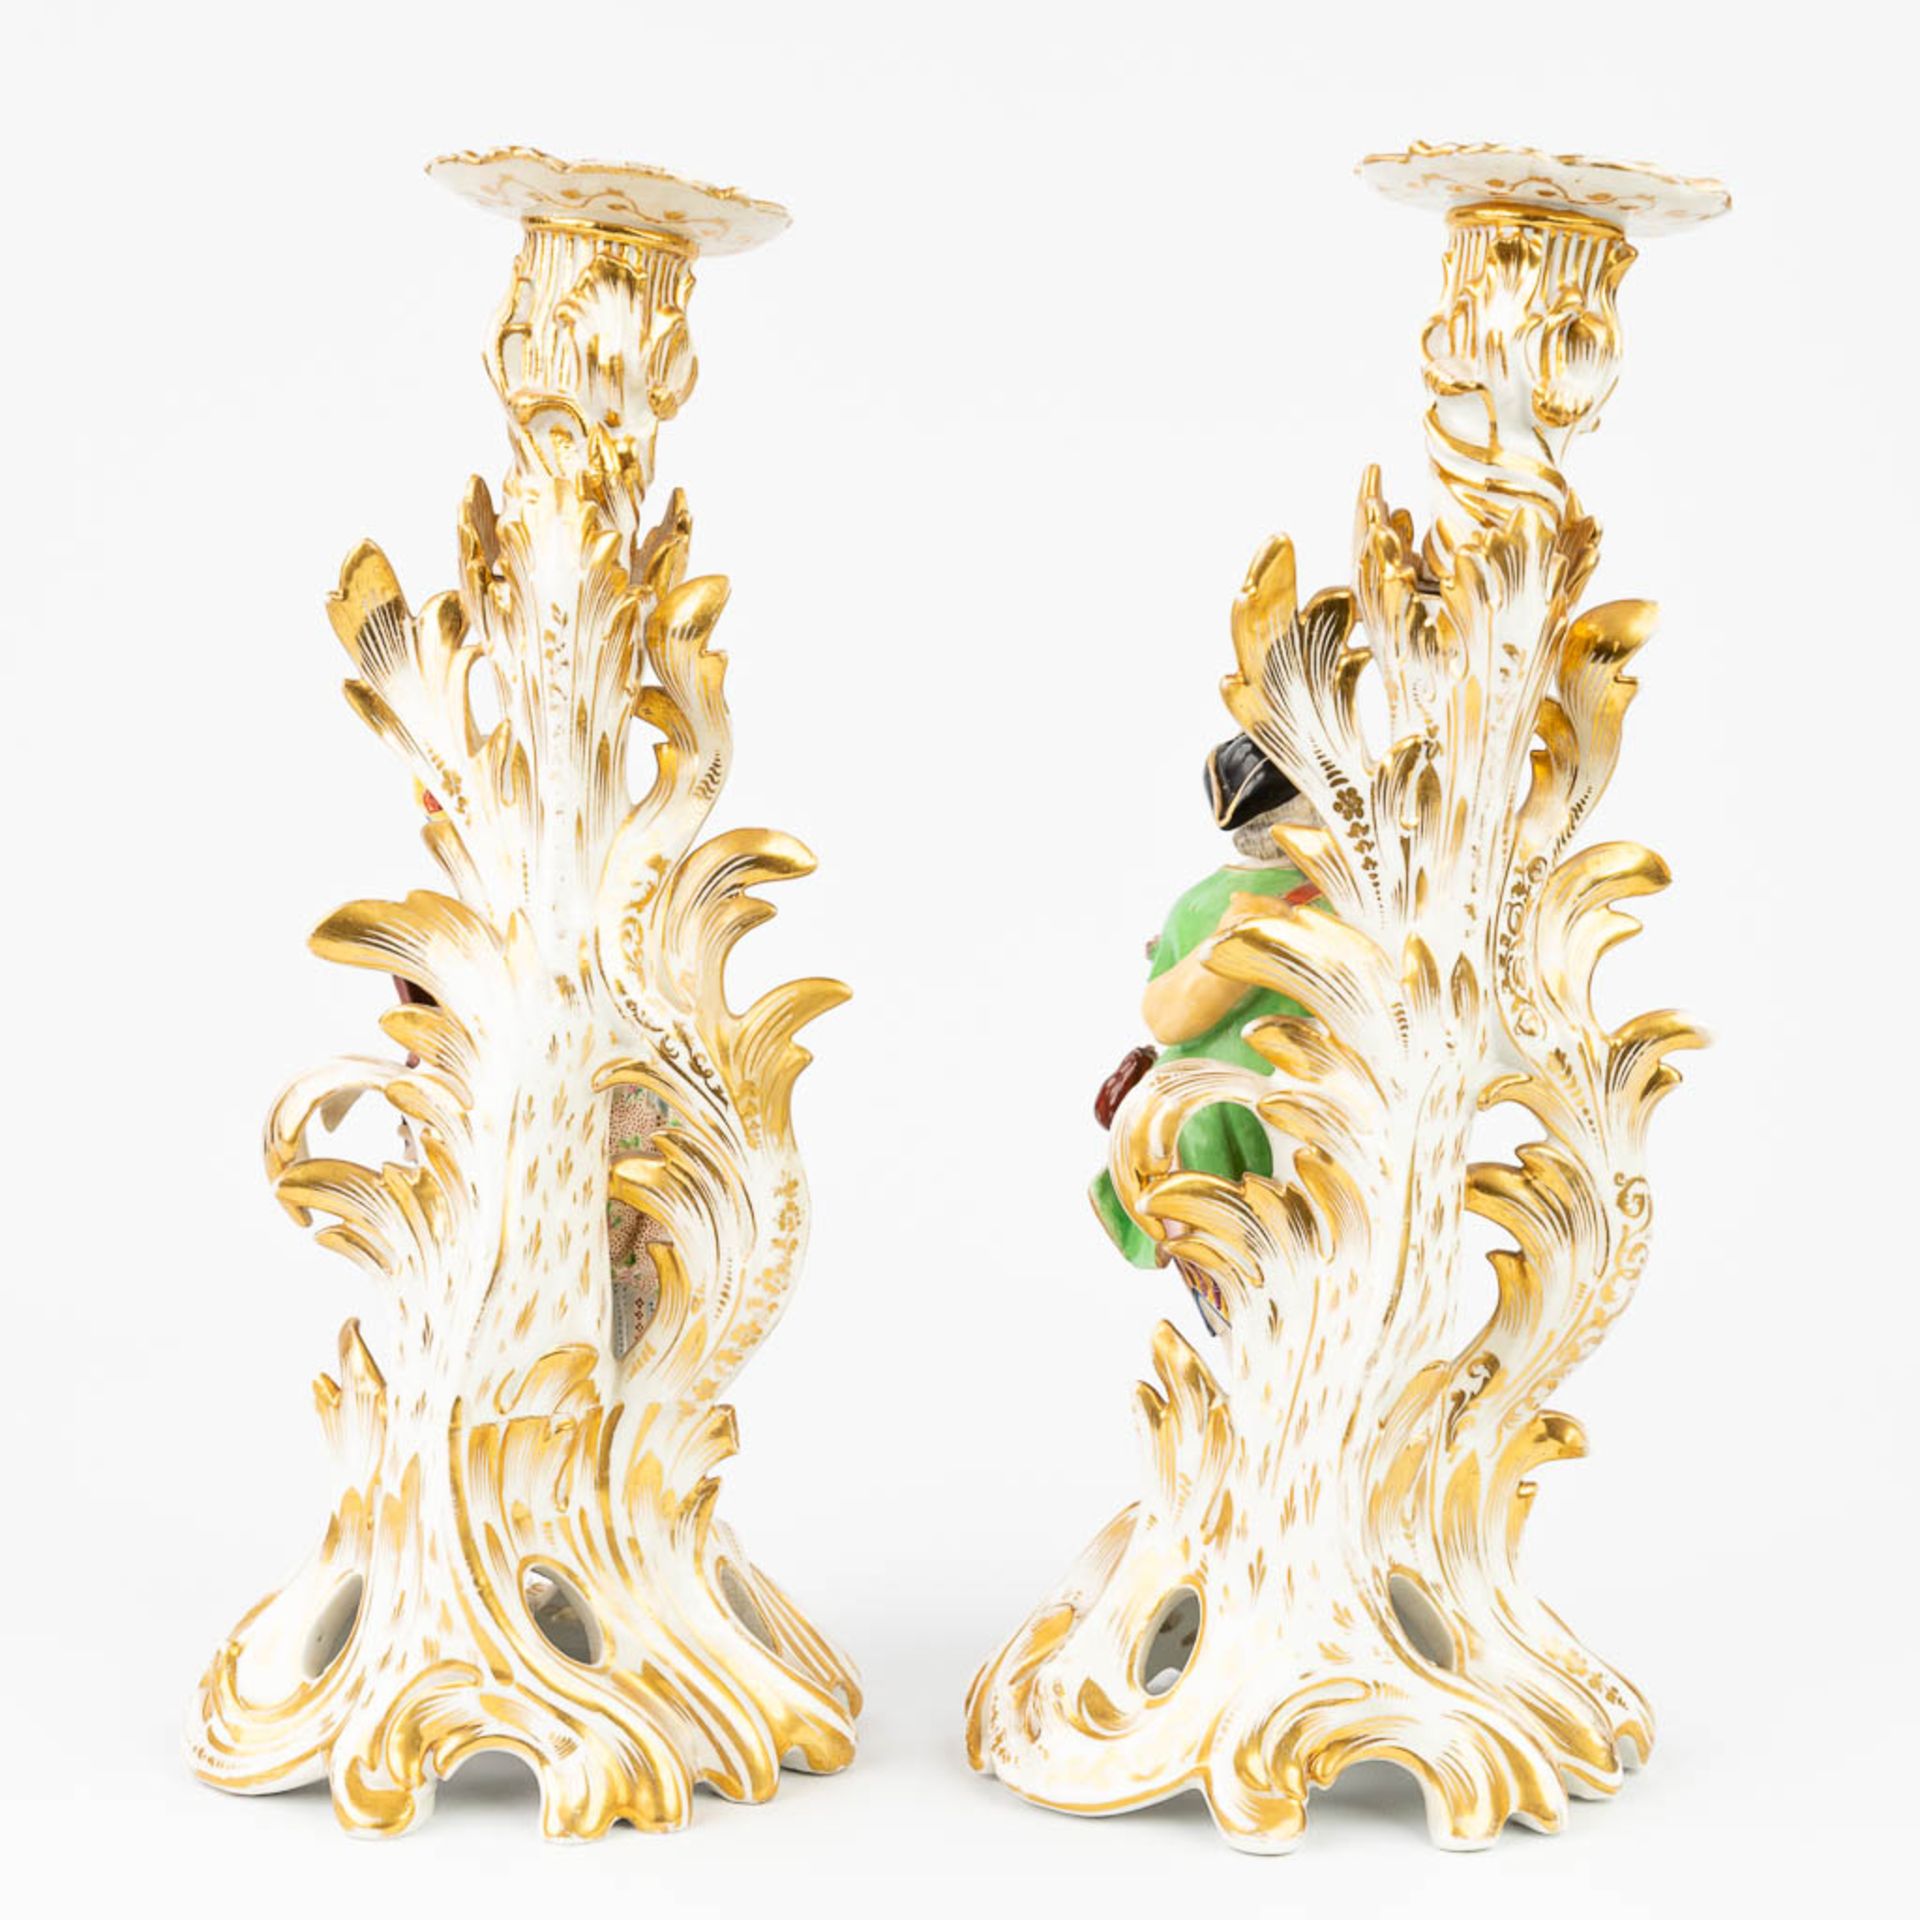 JACOB-PETIT (1796-1868) A pair of candlesticks made of porcelain (13 x 14 x 34cm) - Image 12 of 15